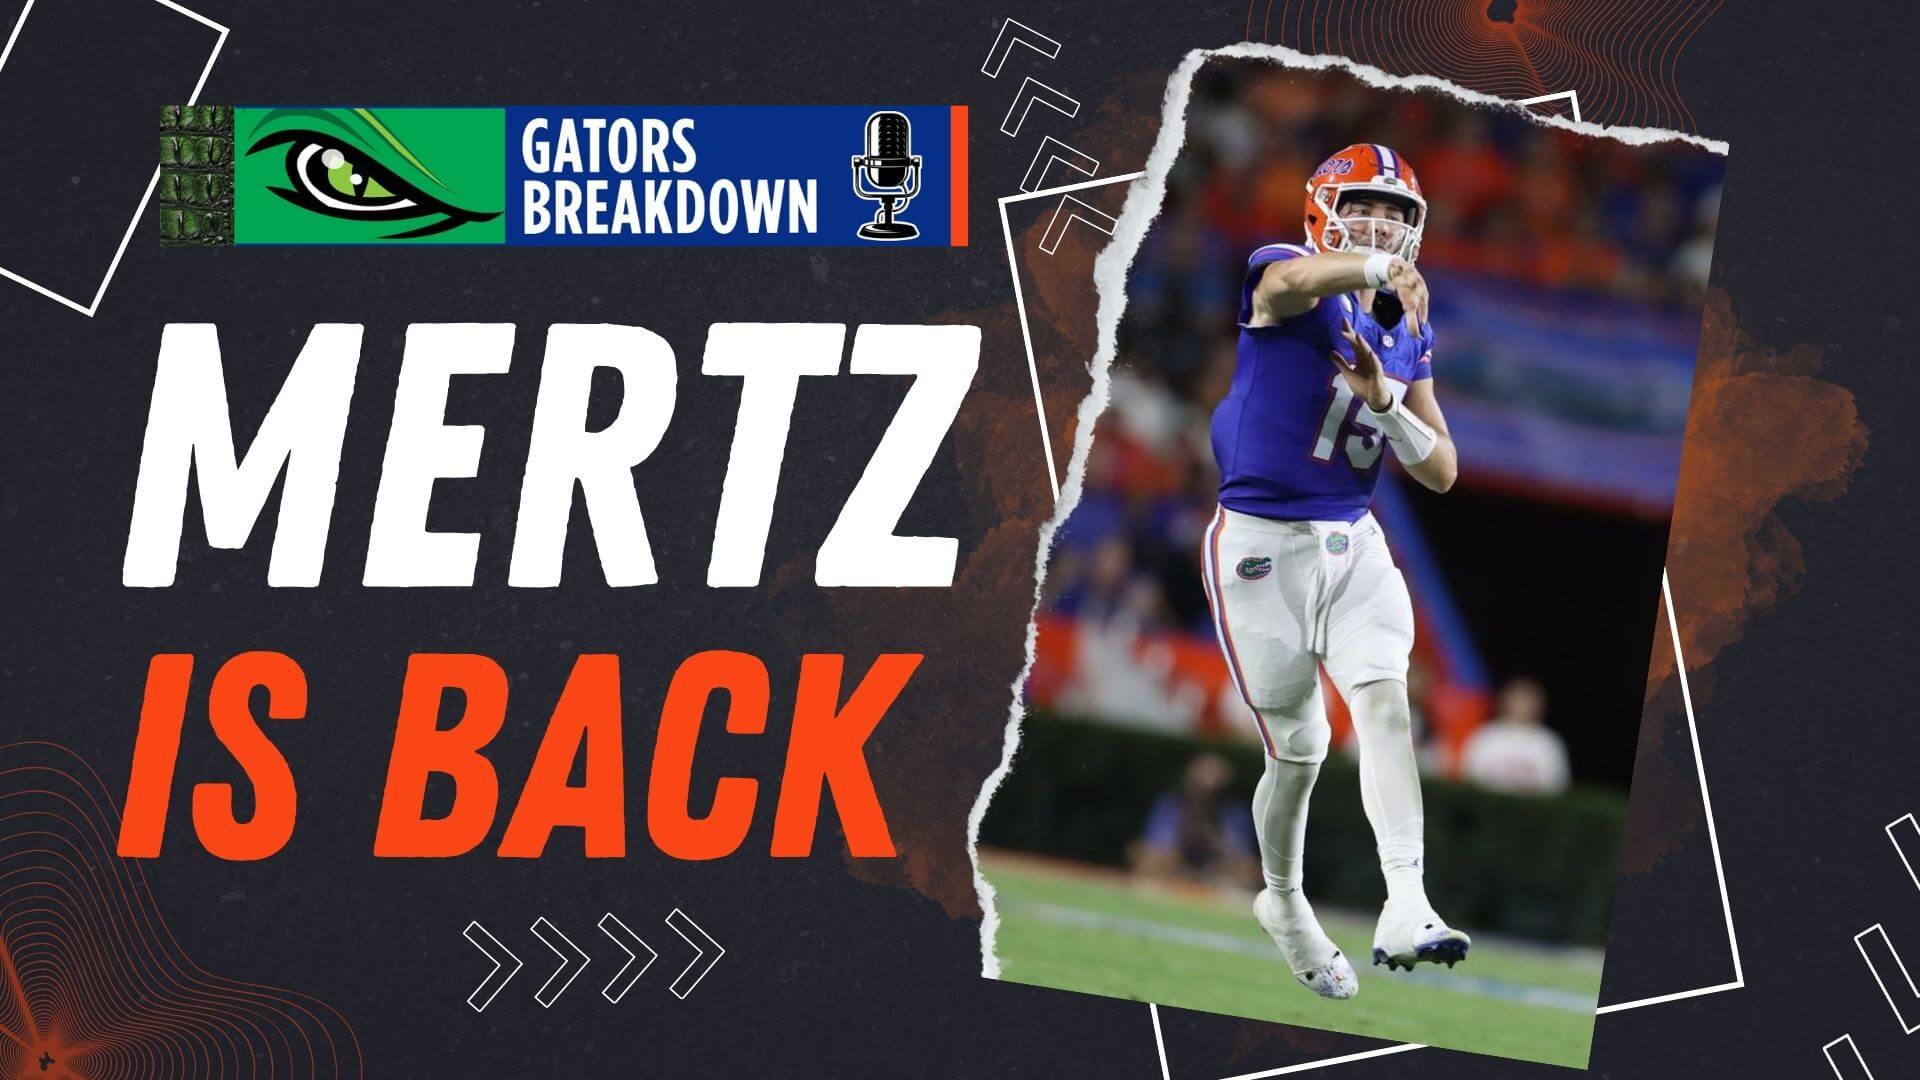 Mertz is returning to Florida